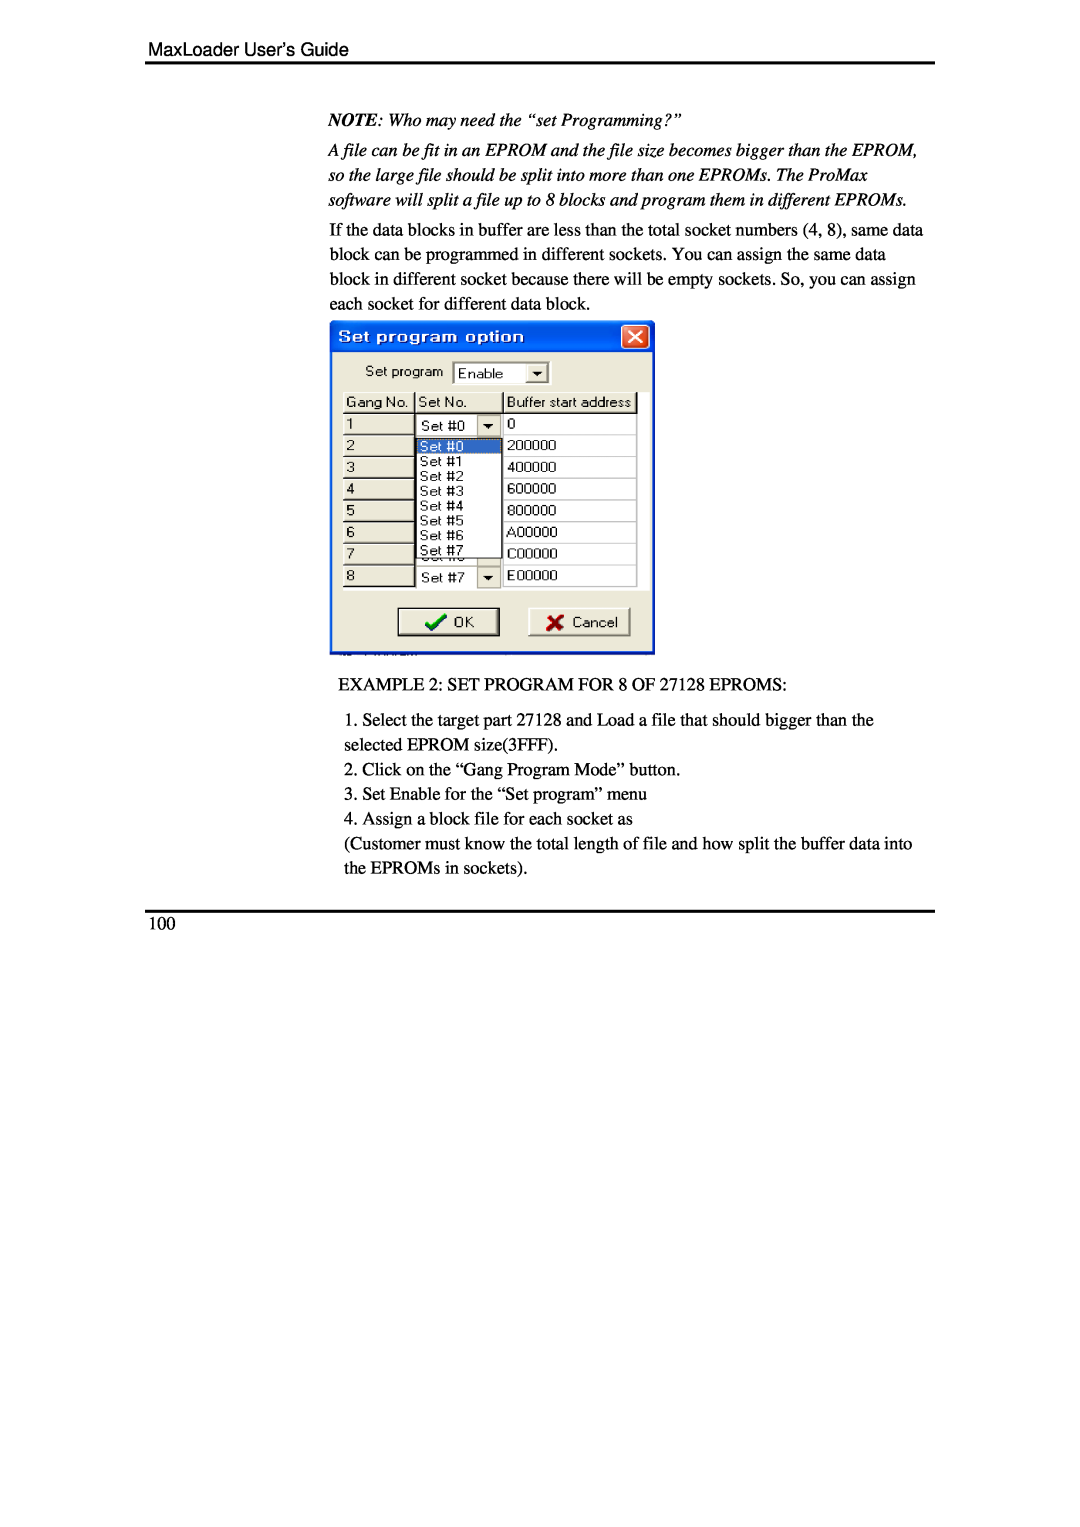 IBM manual NOTE Who may need the “set Programming?”, MaxLoader User’s Guide 